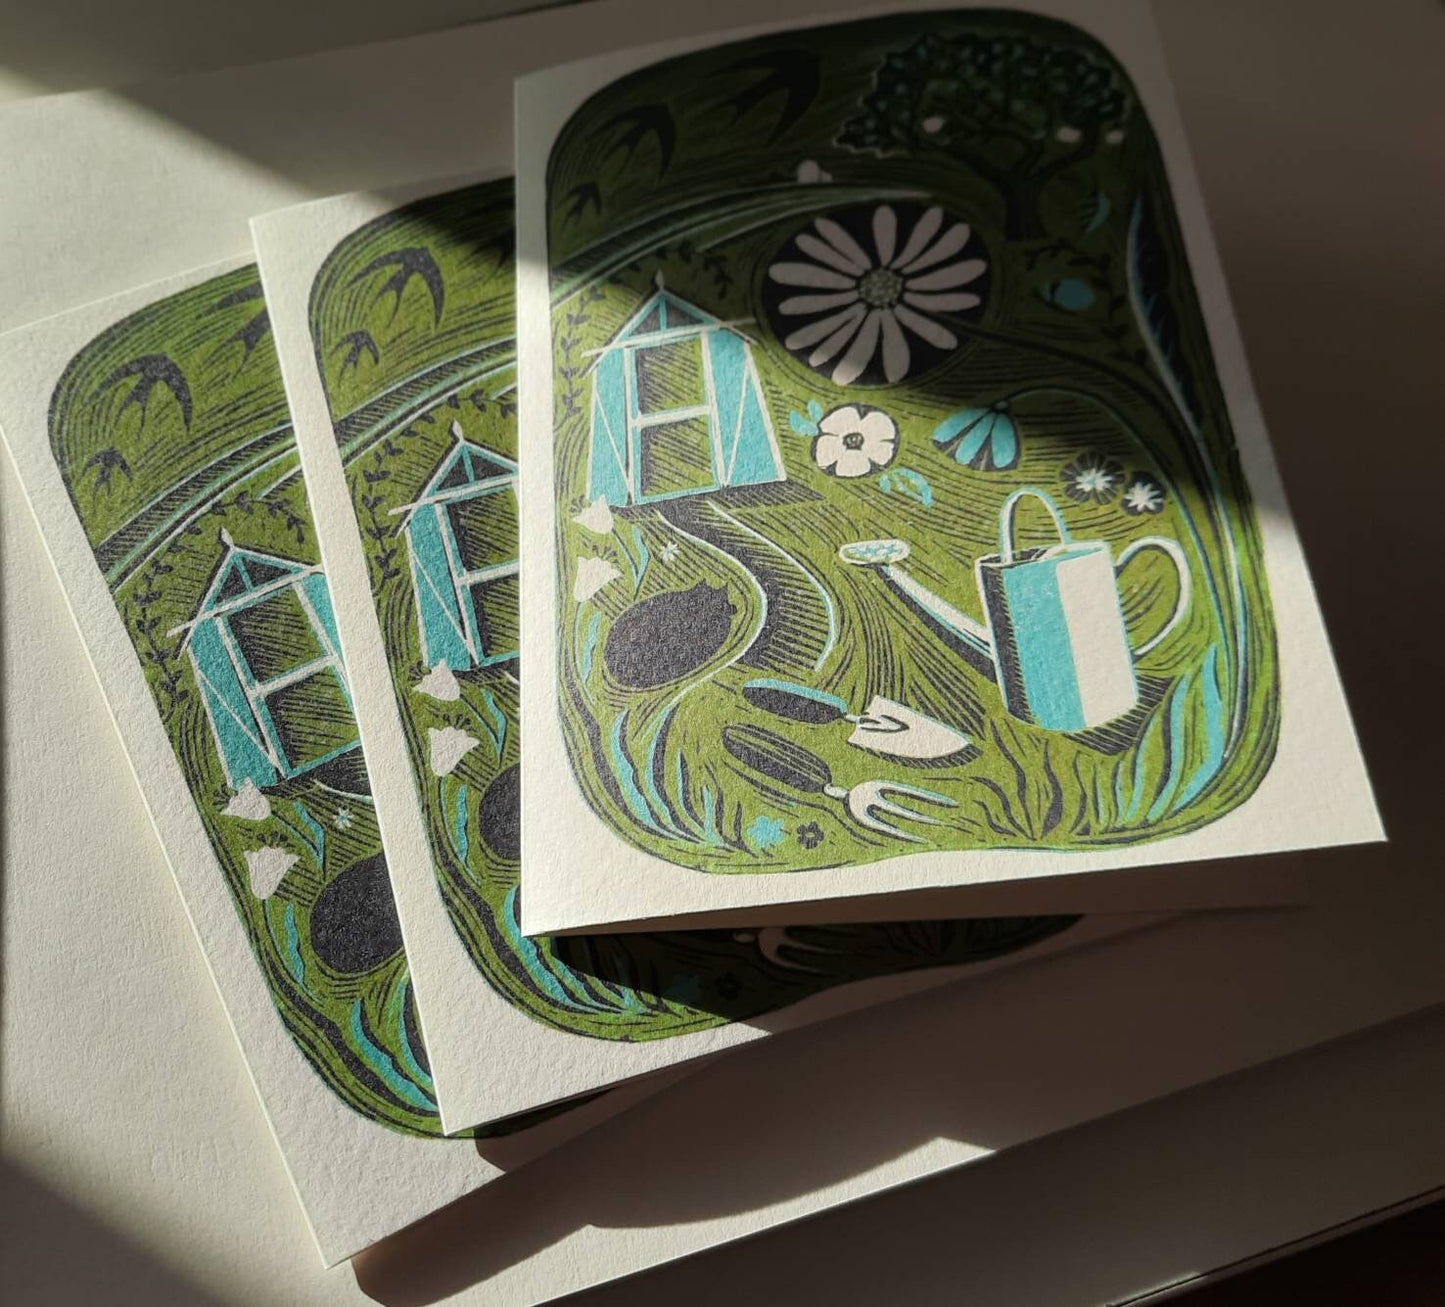 Garden Escape - Greetings Card | Lino Print reproduction | Gardening | Notecard